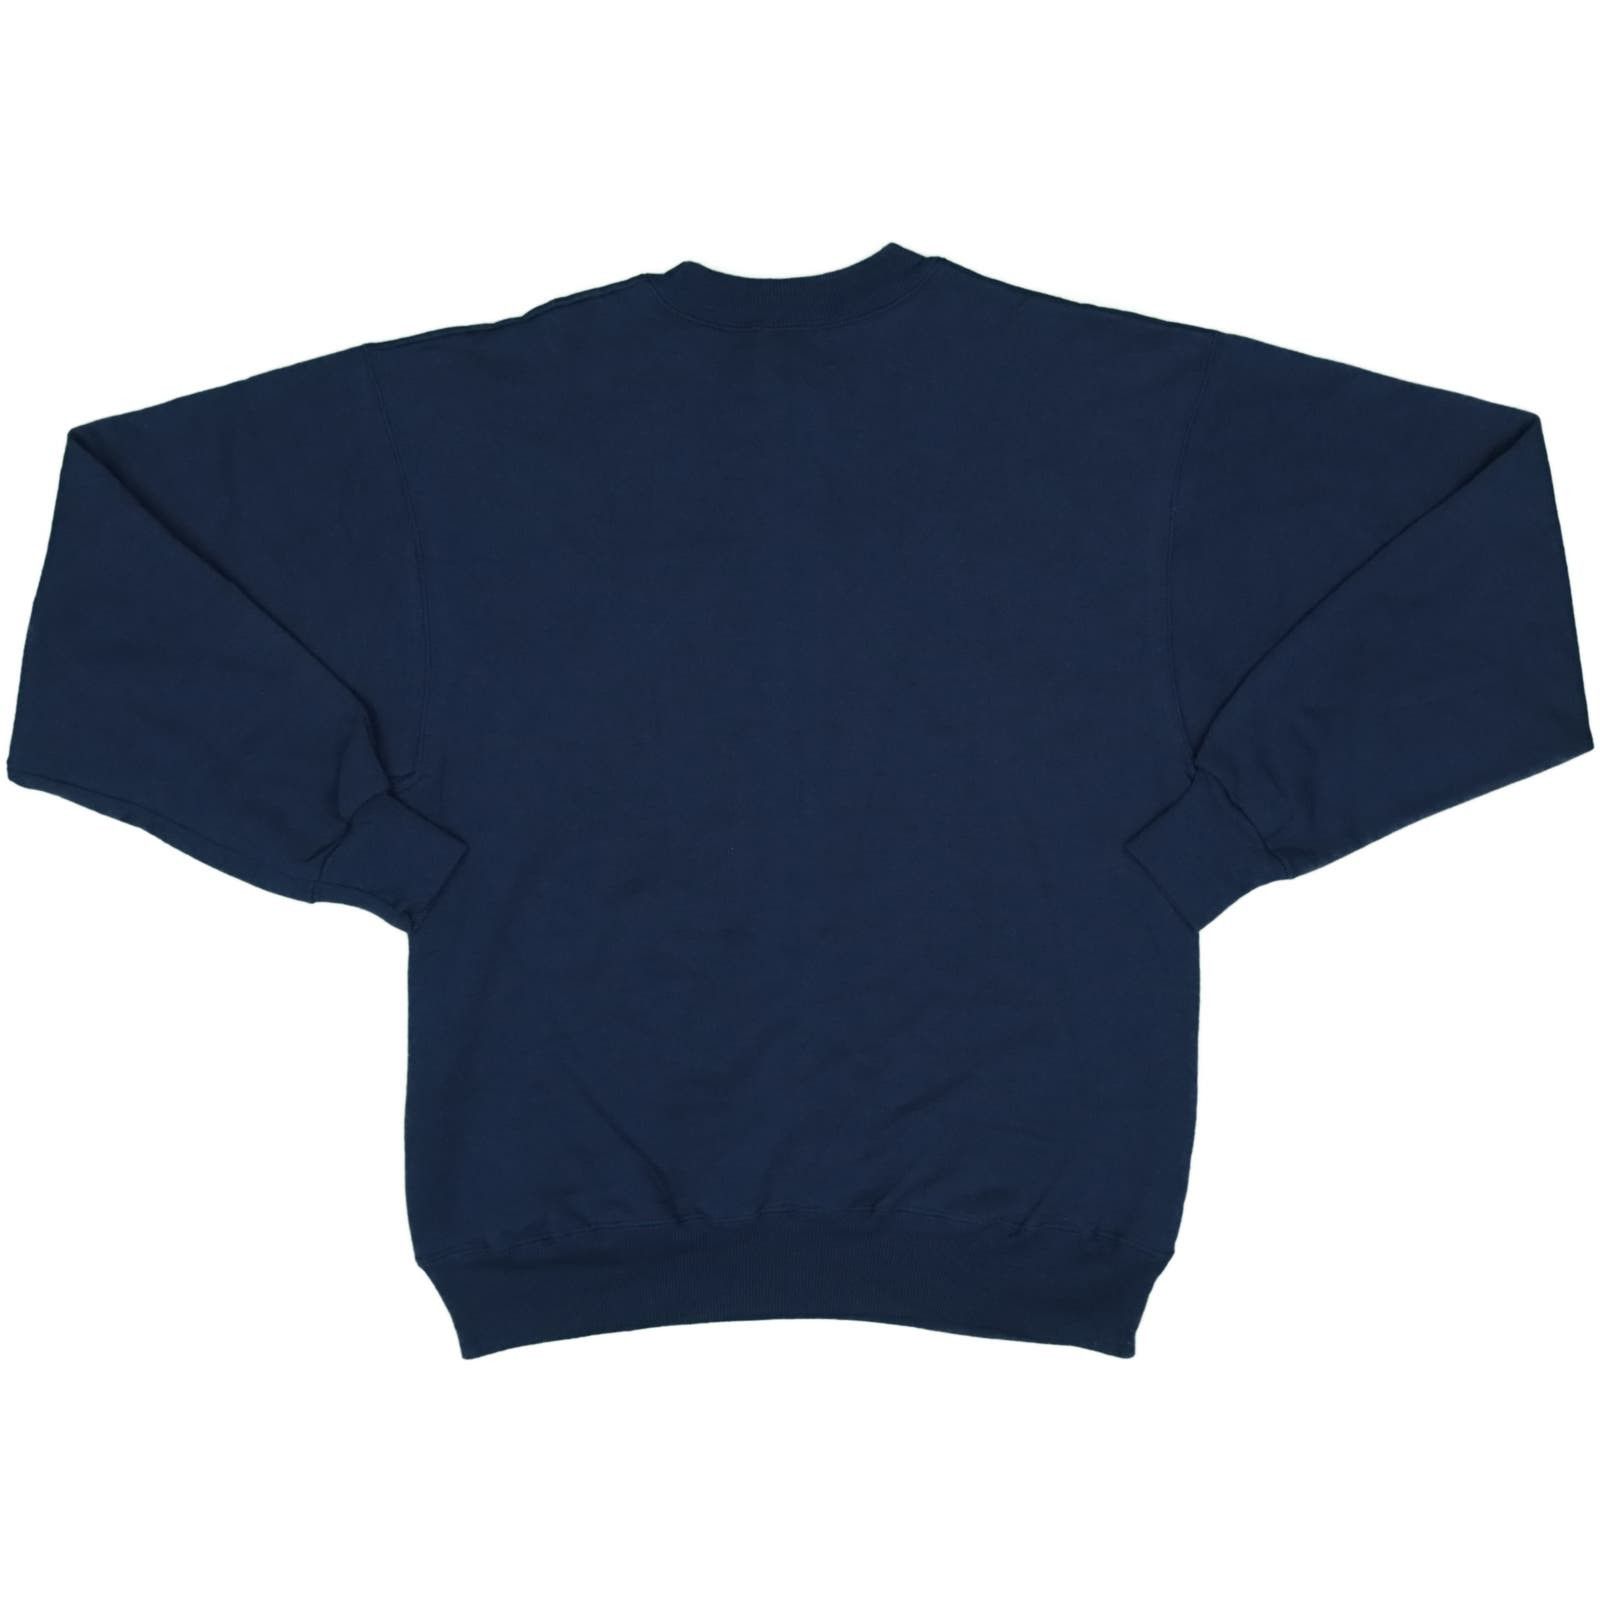 Hanes 90s Vintage Dallas Cowboys Football Crewneck Sweatshirt Size US S / EU 44-46 / 1 - 3 Thumbnail